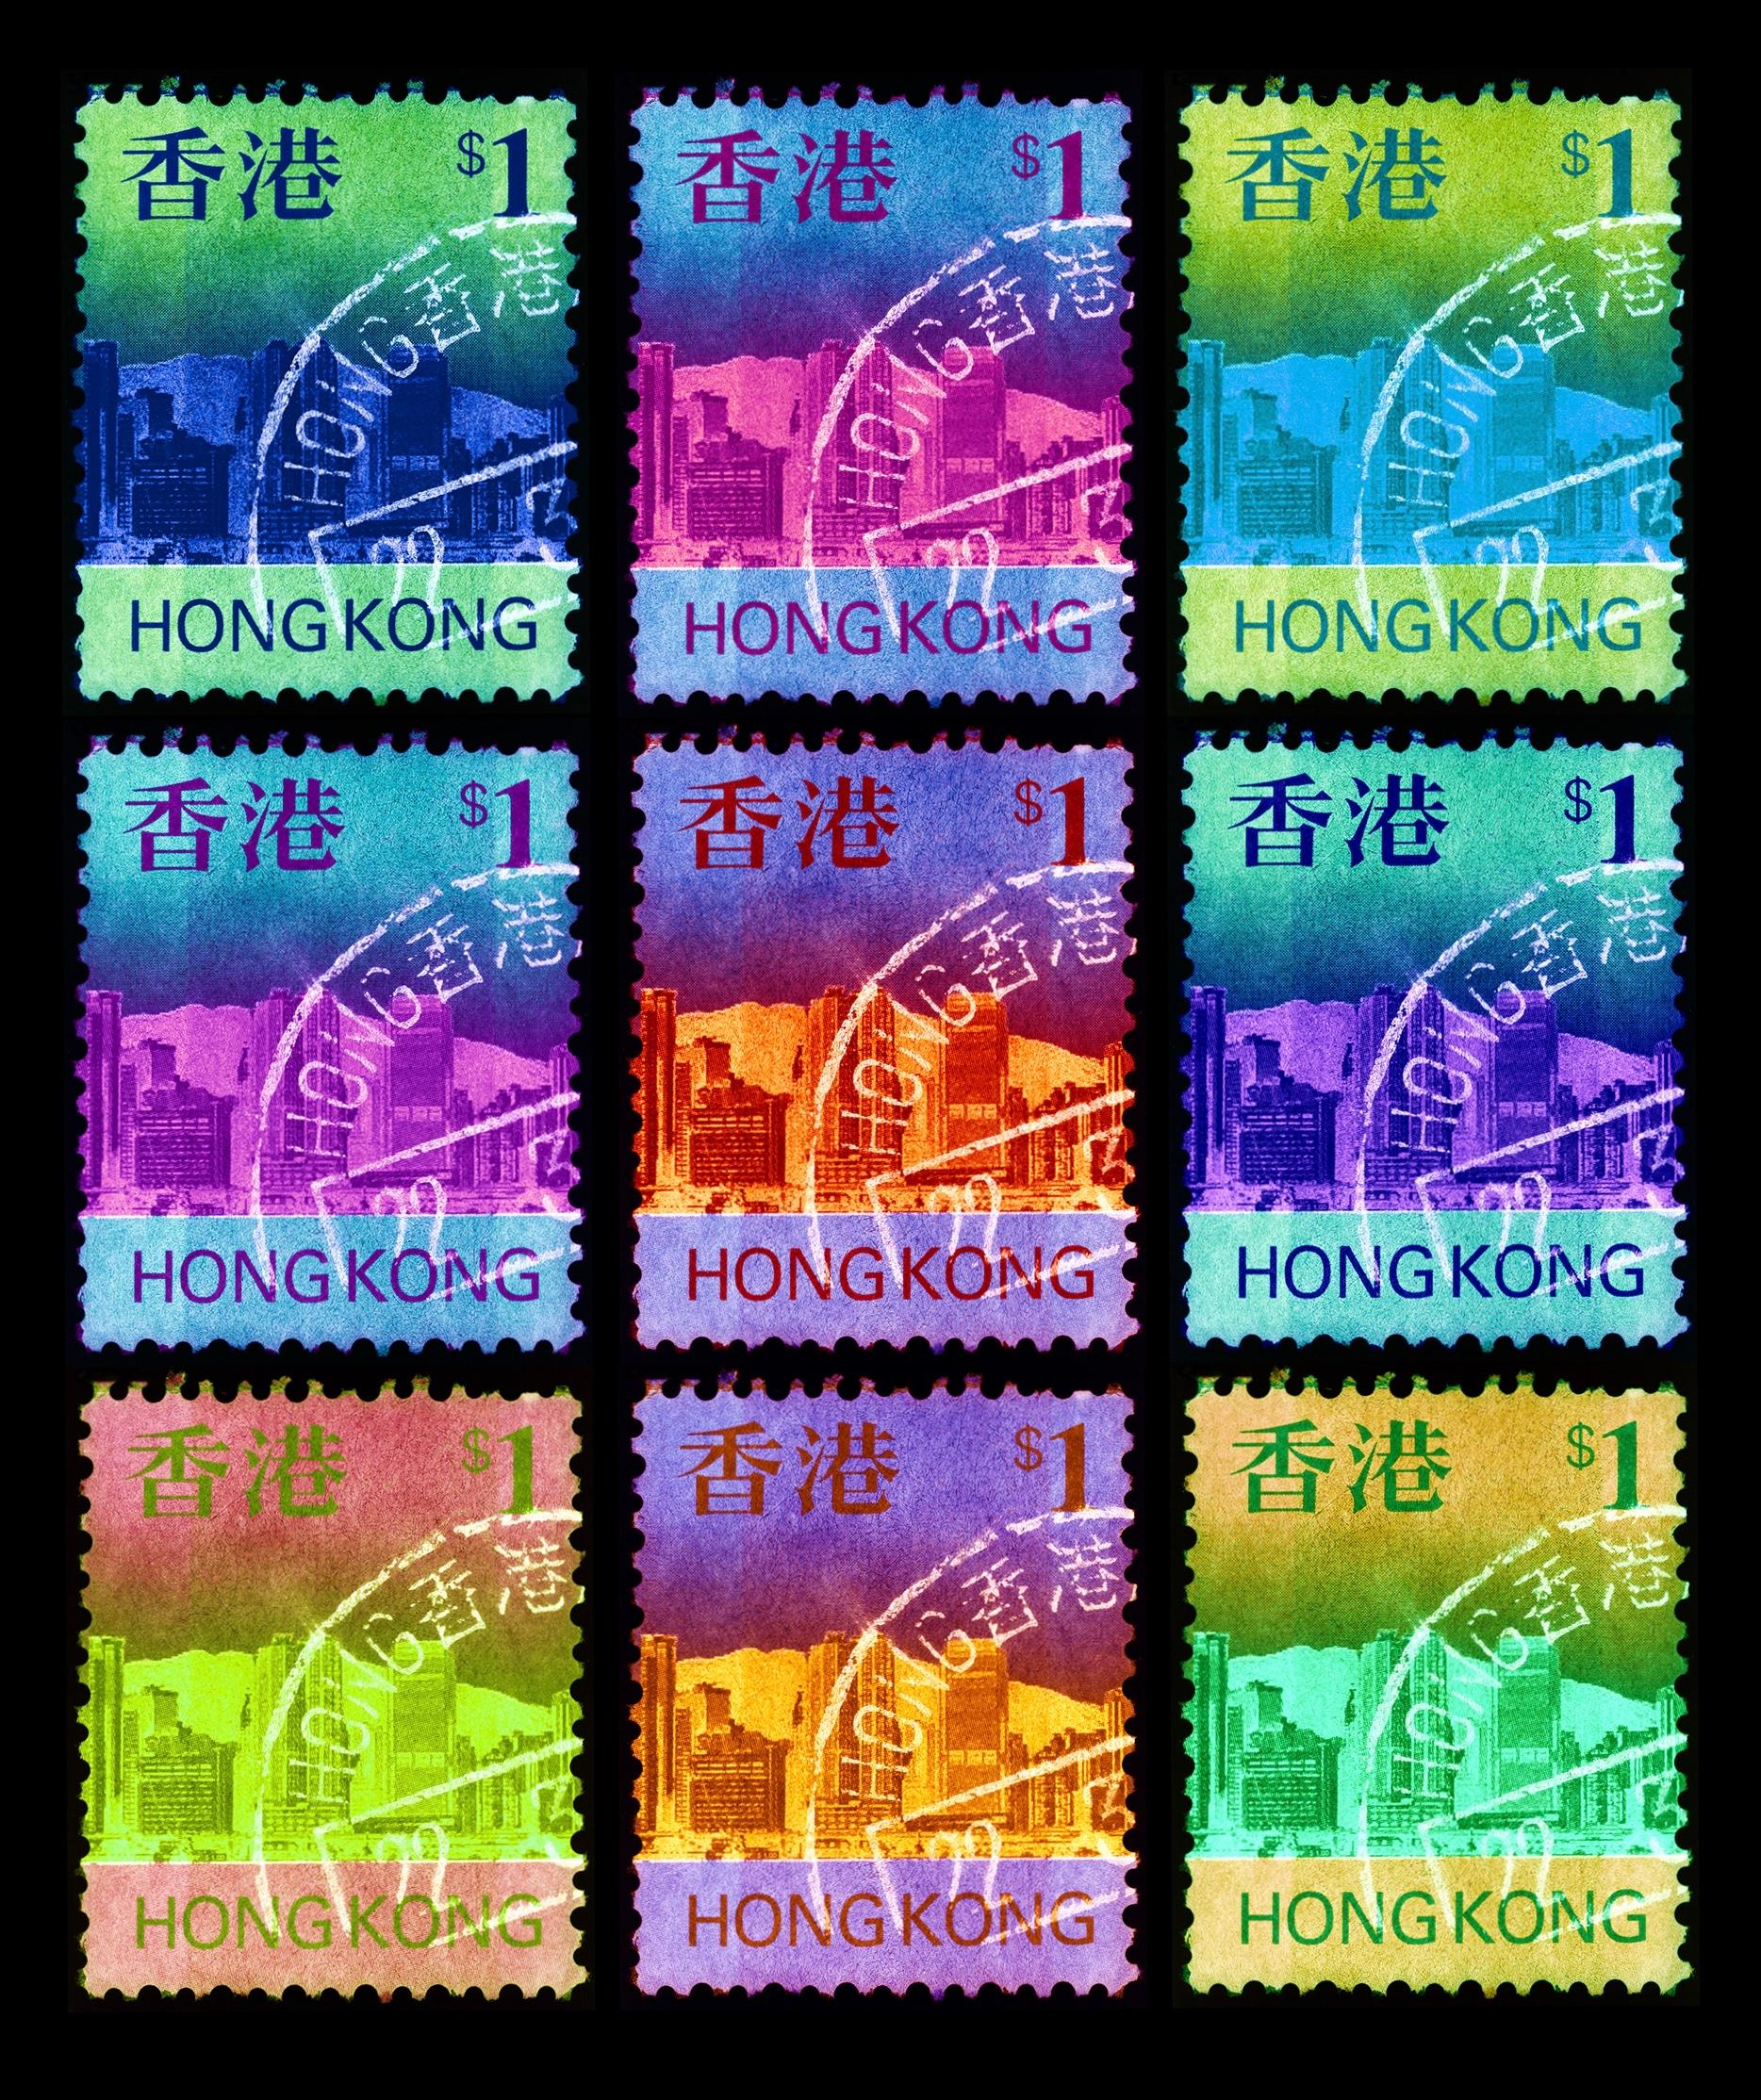 Heidler & Heeps Print - Stamp Collection - Eat, Sleep, HK$1, Repeat - Conceptual, Pop Art, Photography 